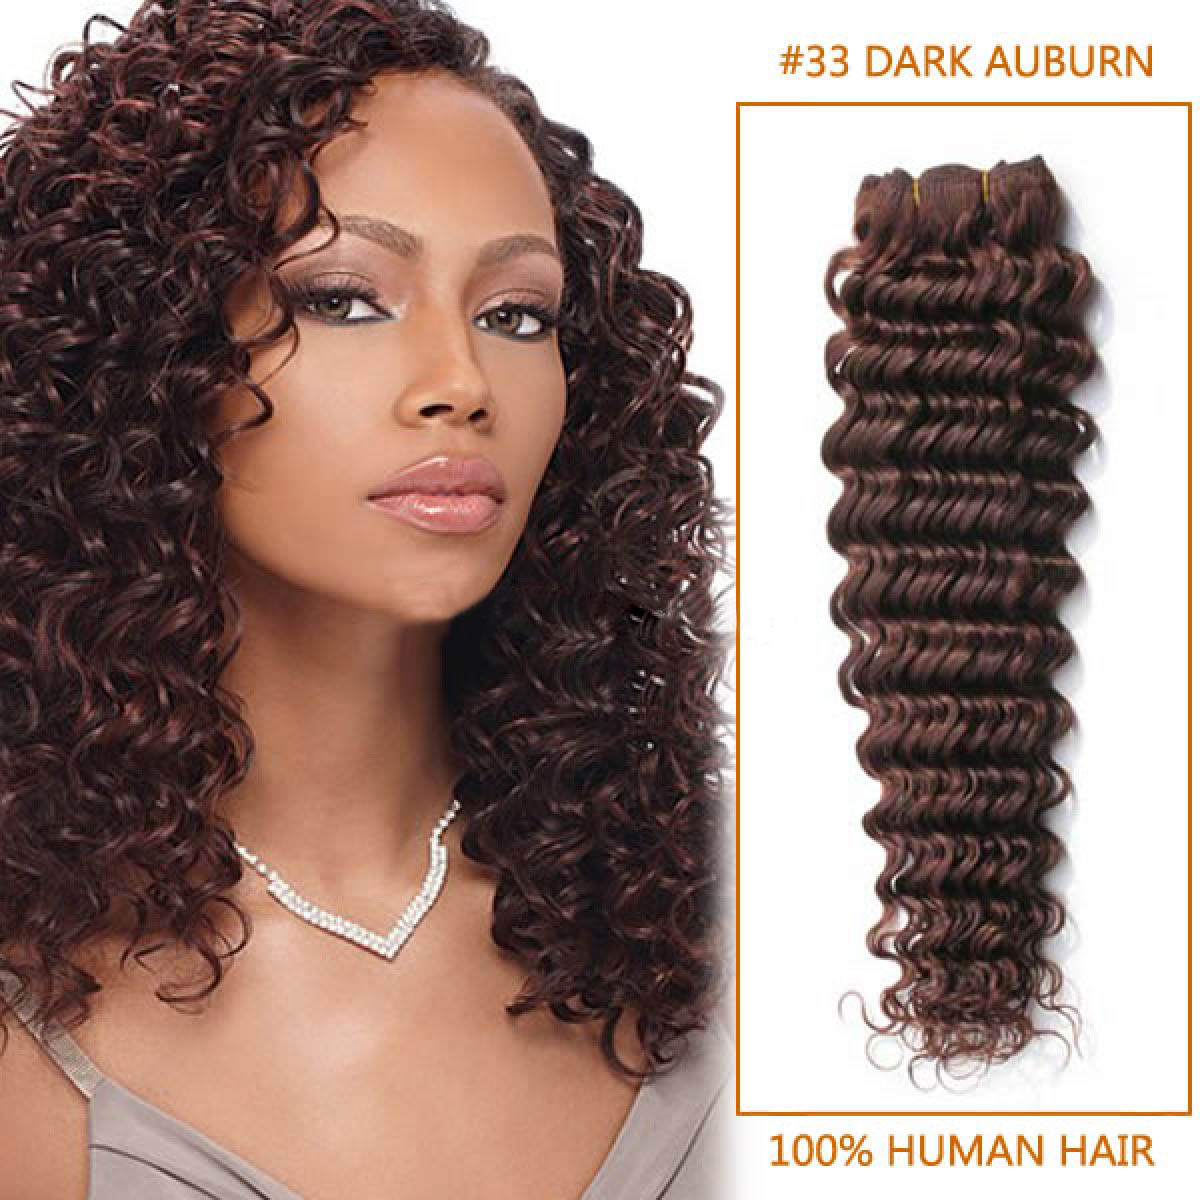 20 Inch 33 Dark Auburn Deep Wave Indian Remy Hair Wefts 